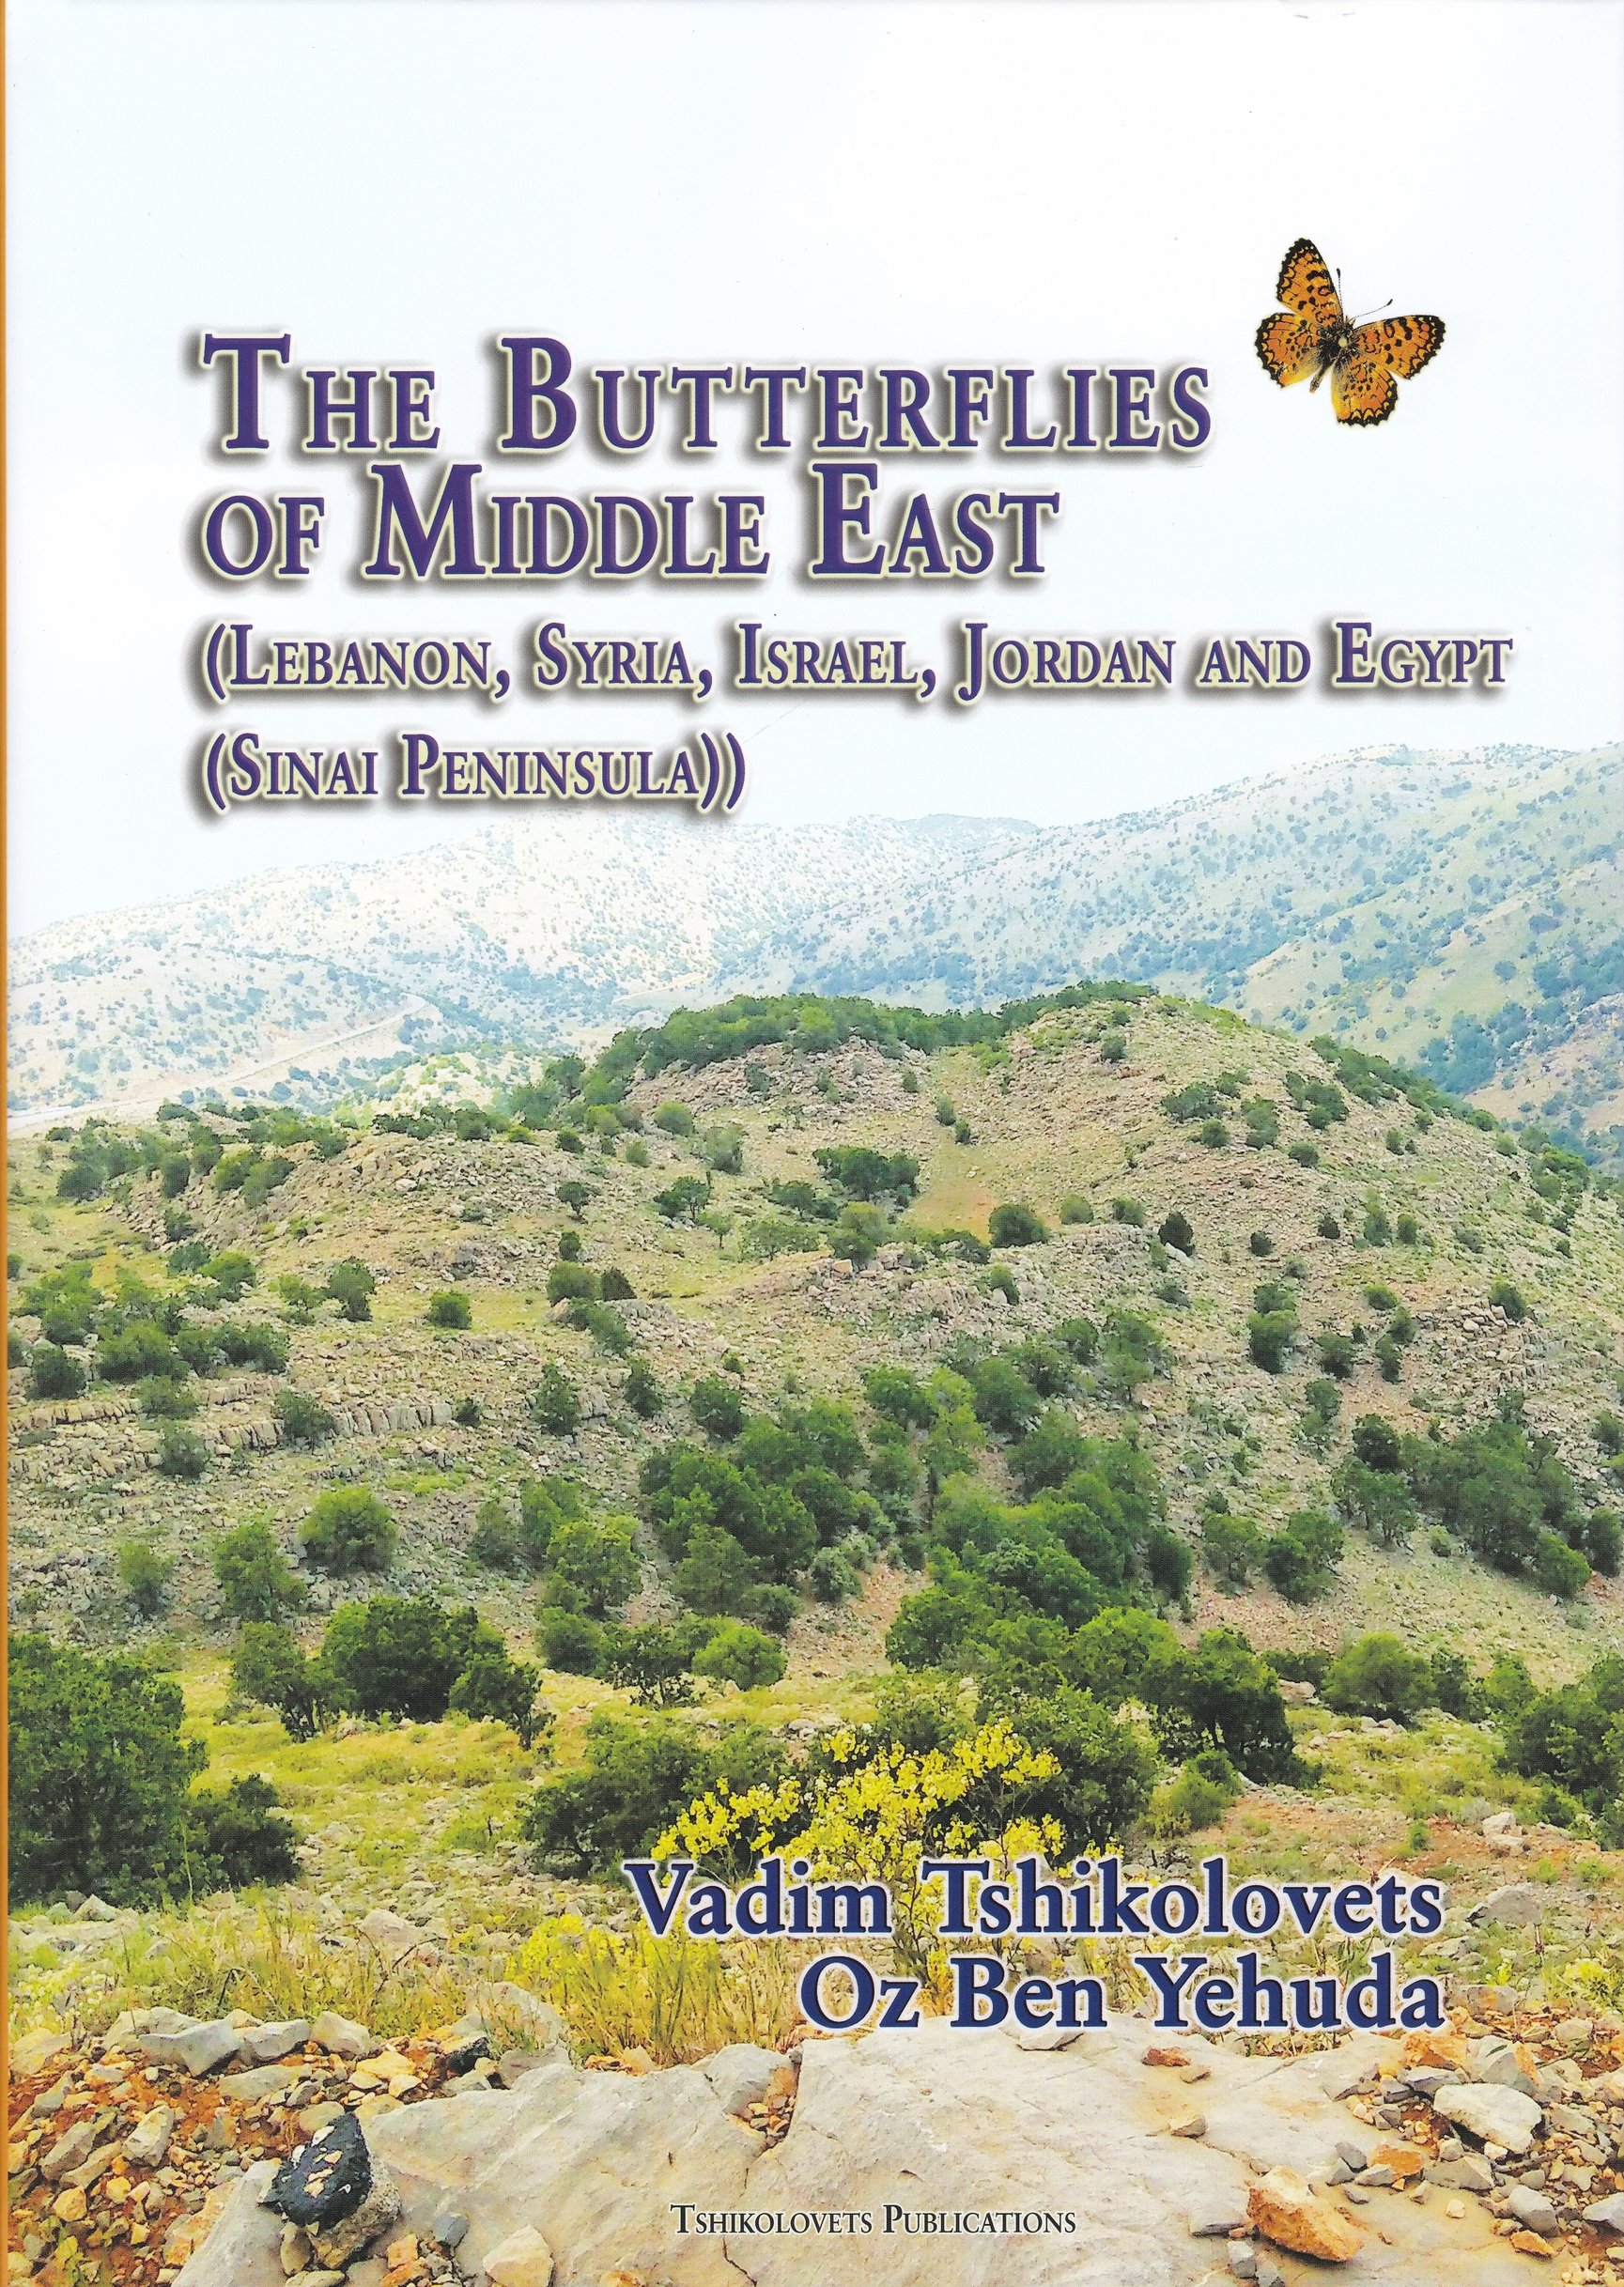 Vadim Tshikolovets; Oz Ben Yehuda: The Butterflies of Middle East (Lebanon, Syria, Israel, Jordan and Egypt (Sinai Peninsula)) (Rippl-Rónai Múzeum CC BY-NC-ND)